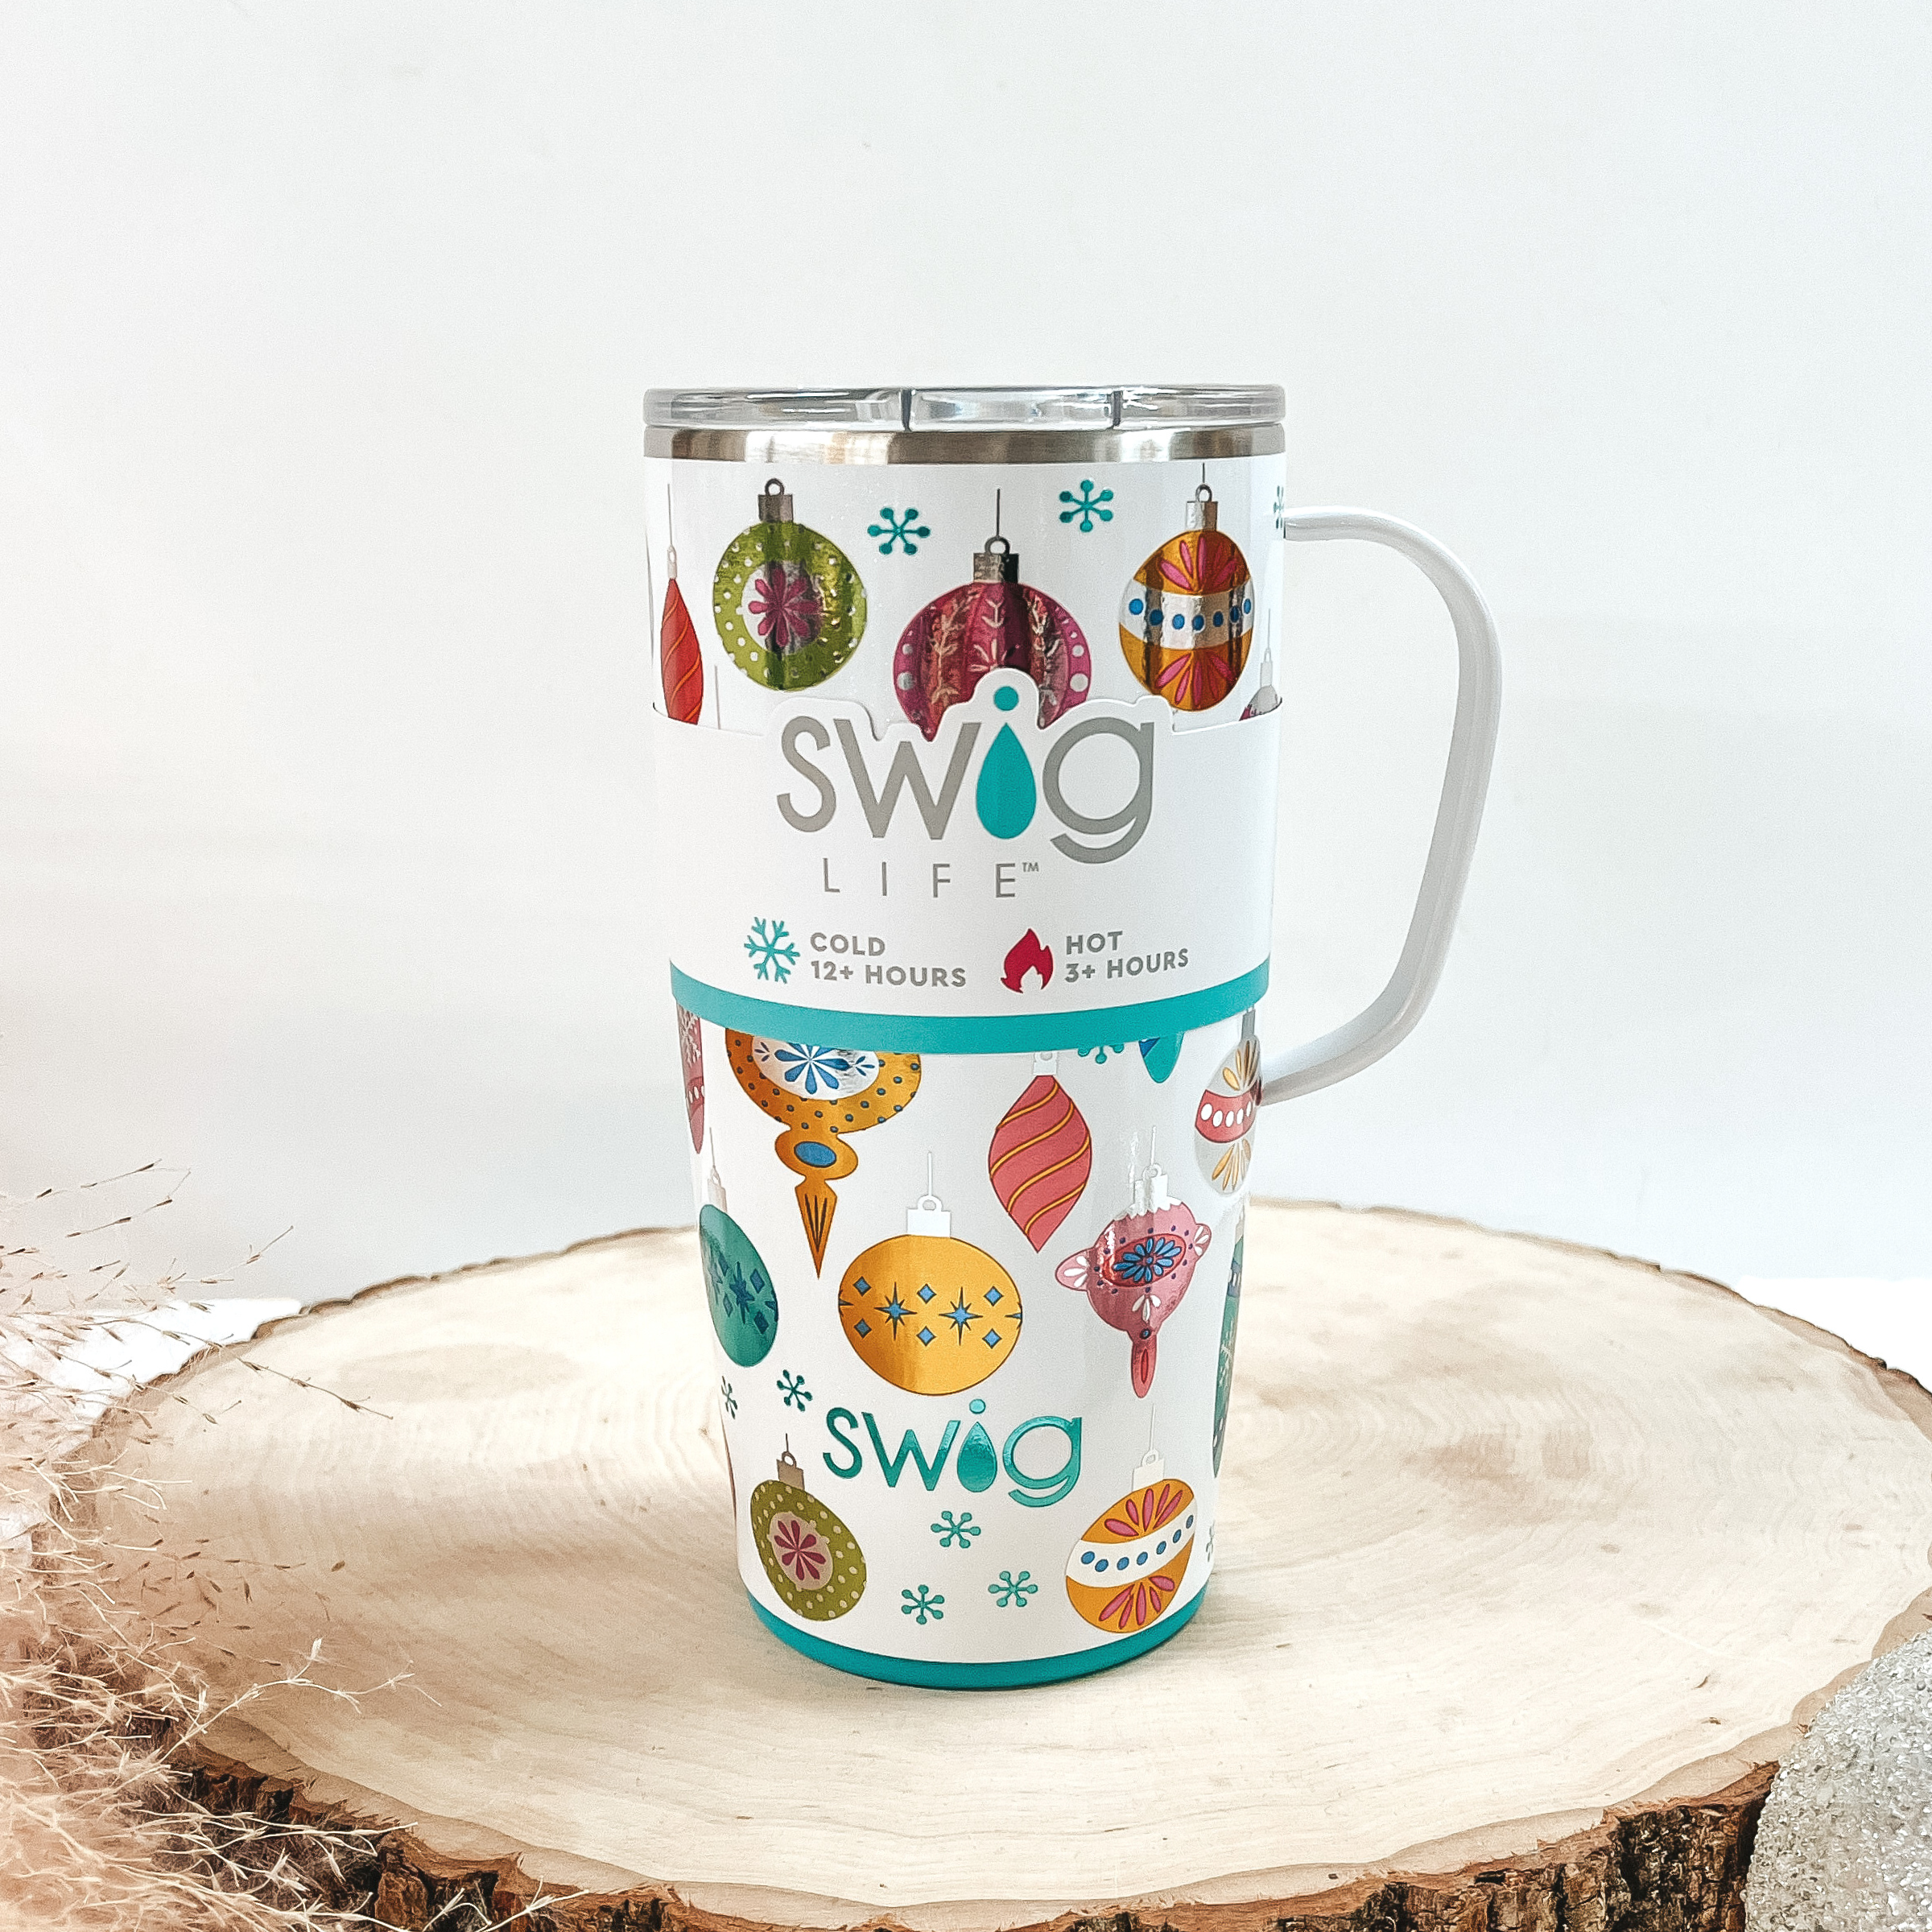 Swig 22oz Travel Mug with Handle – Horse Creek Boutique